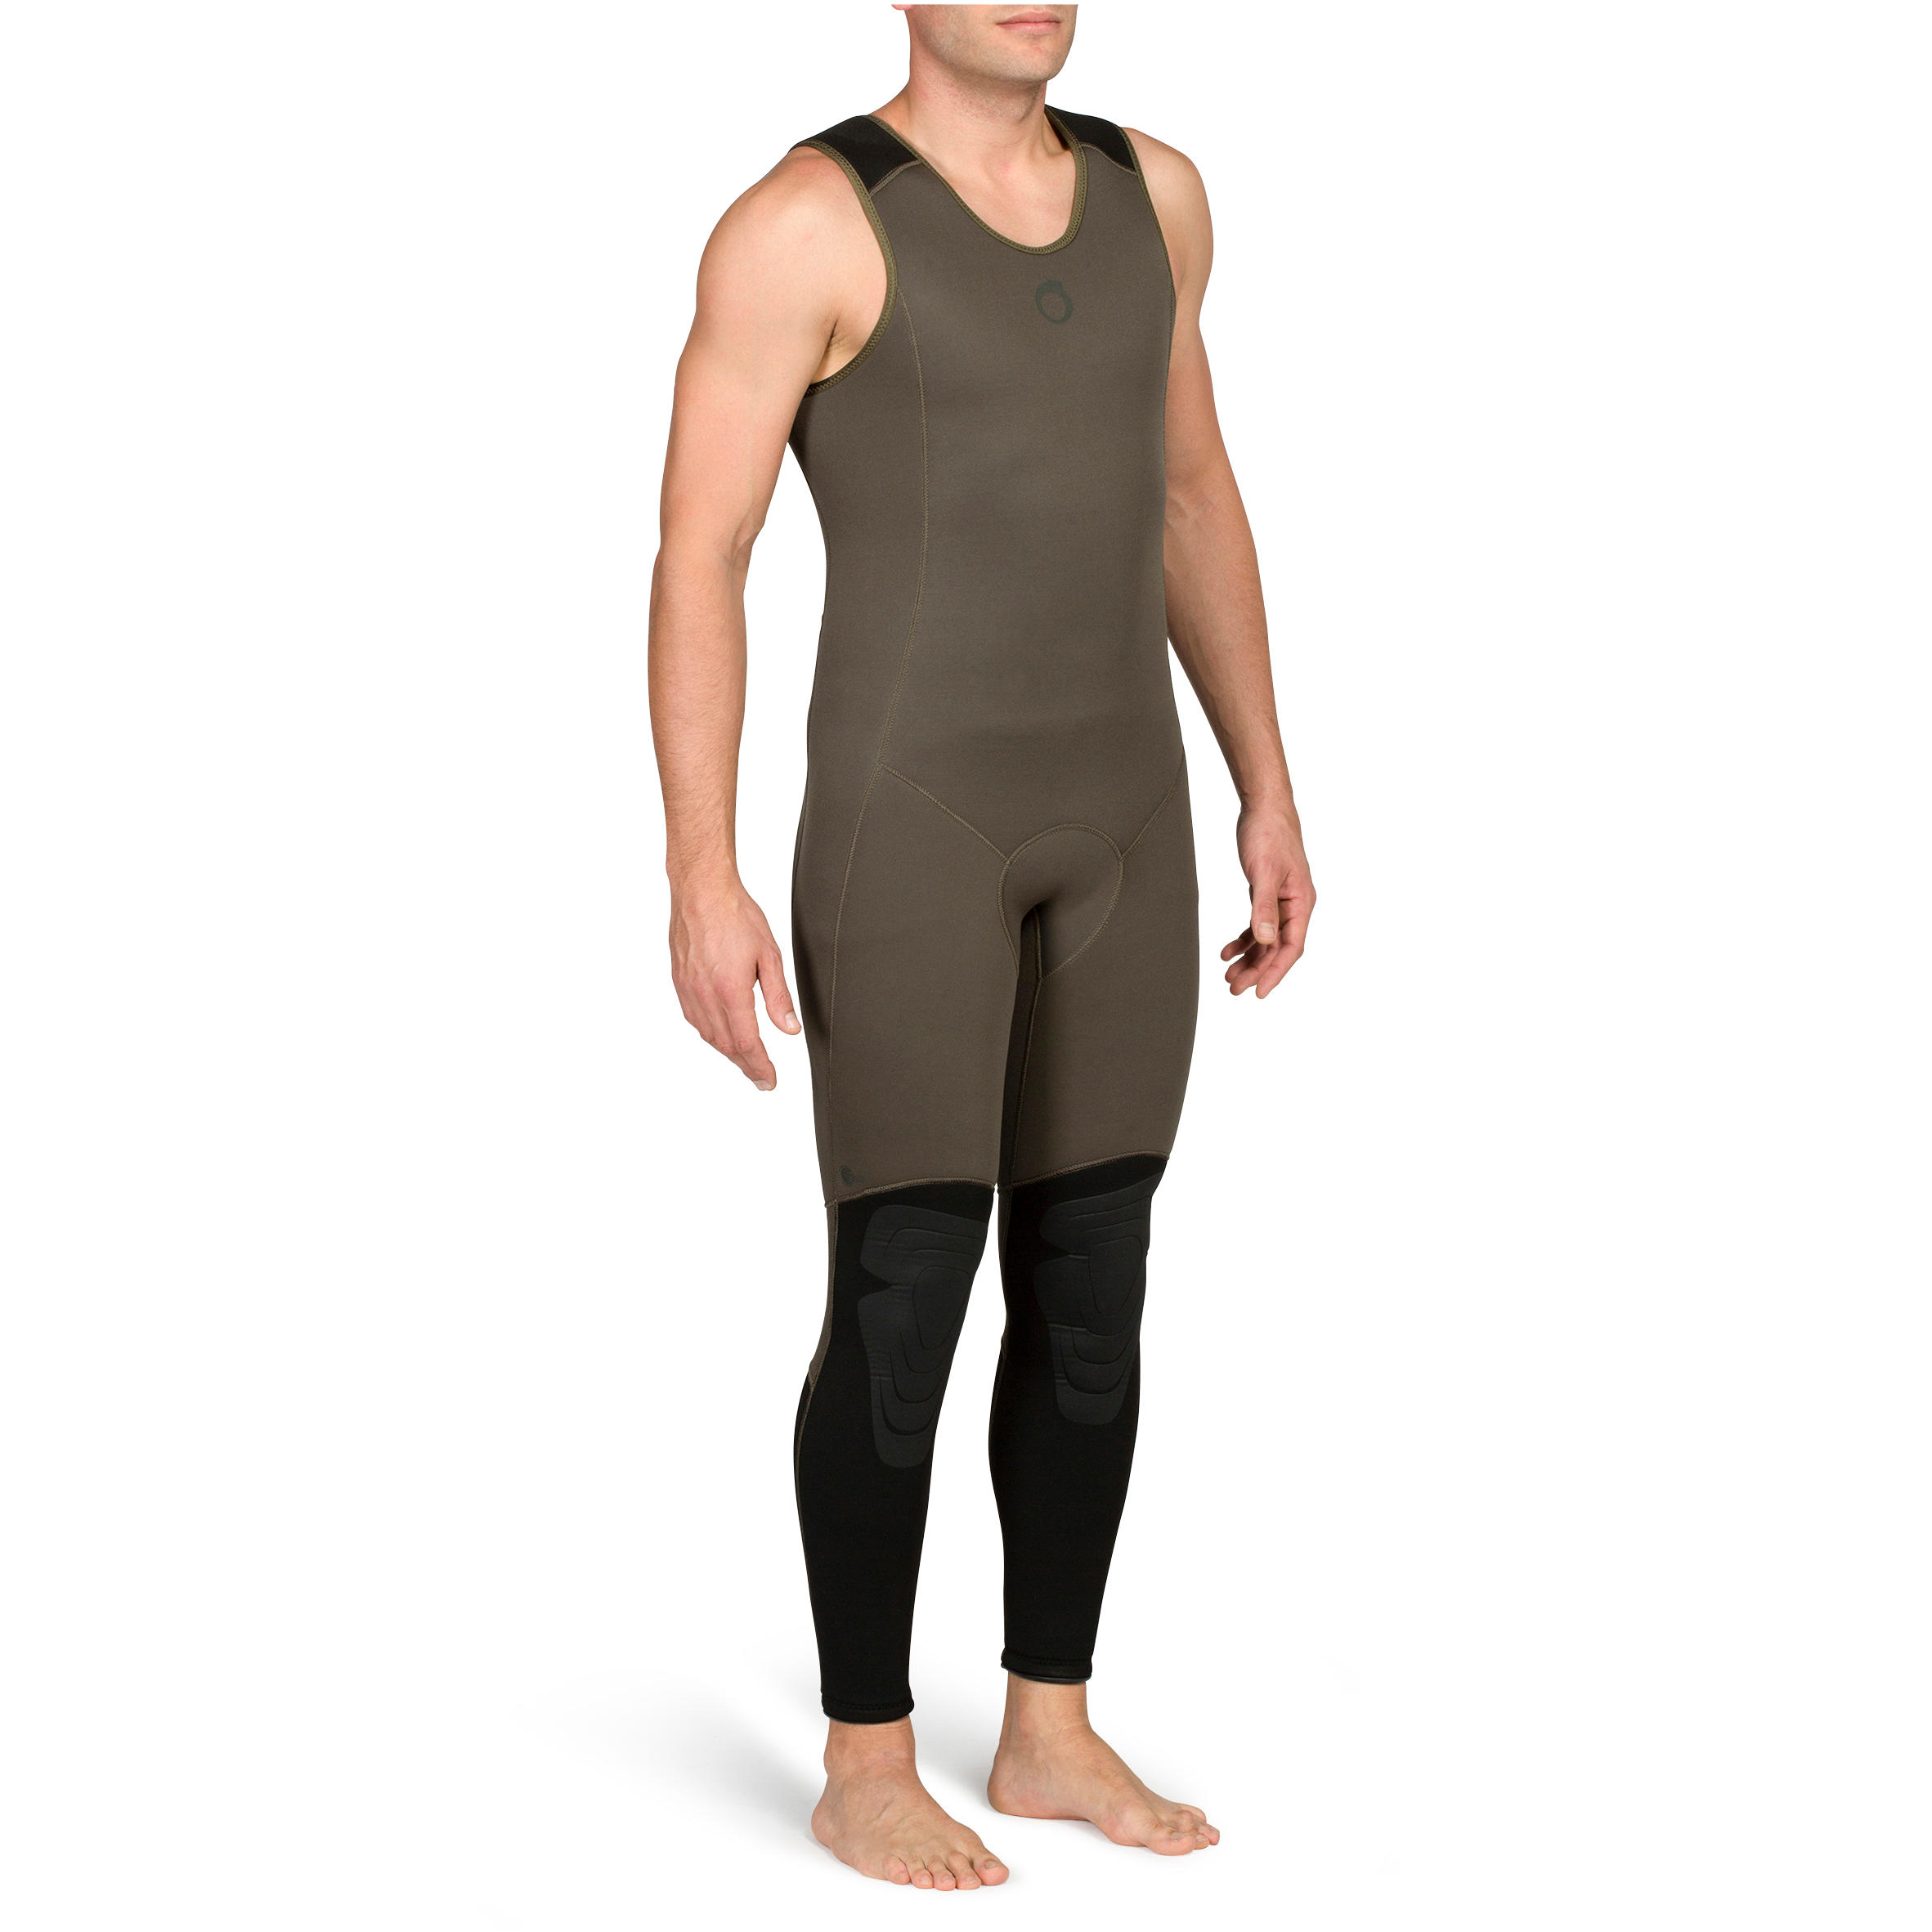 Men's spearfishing sleeveless wetsuit 7 mm neoprene SPF 500 khaki 6/13